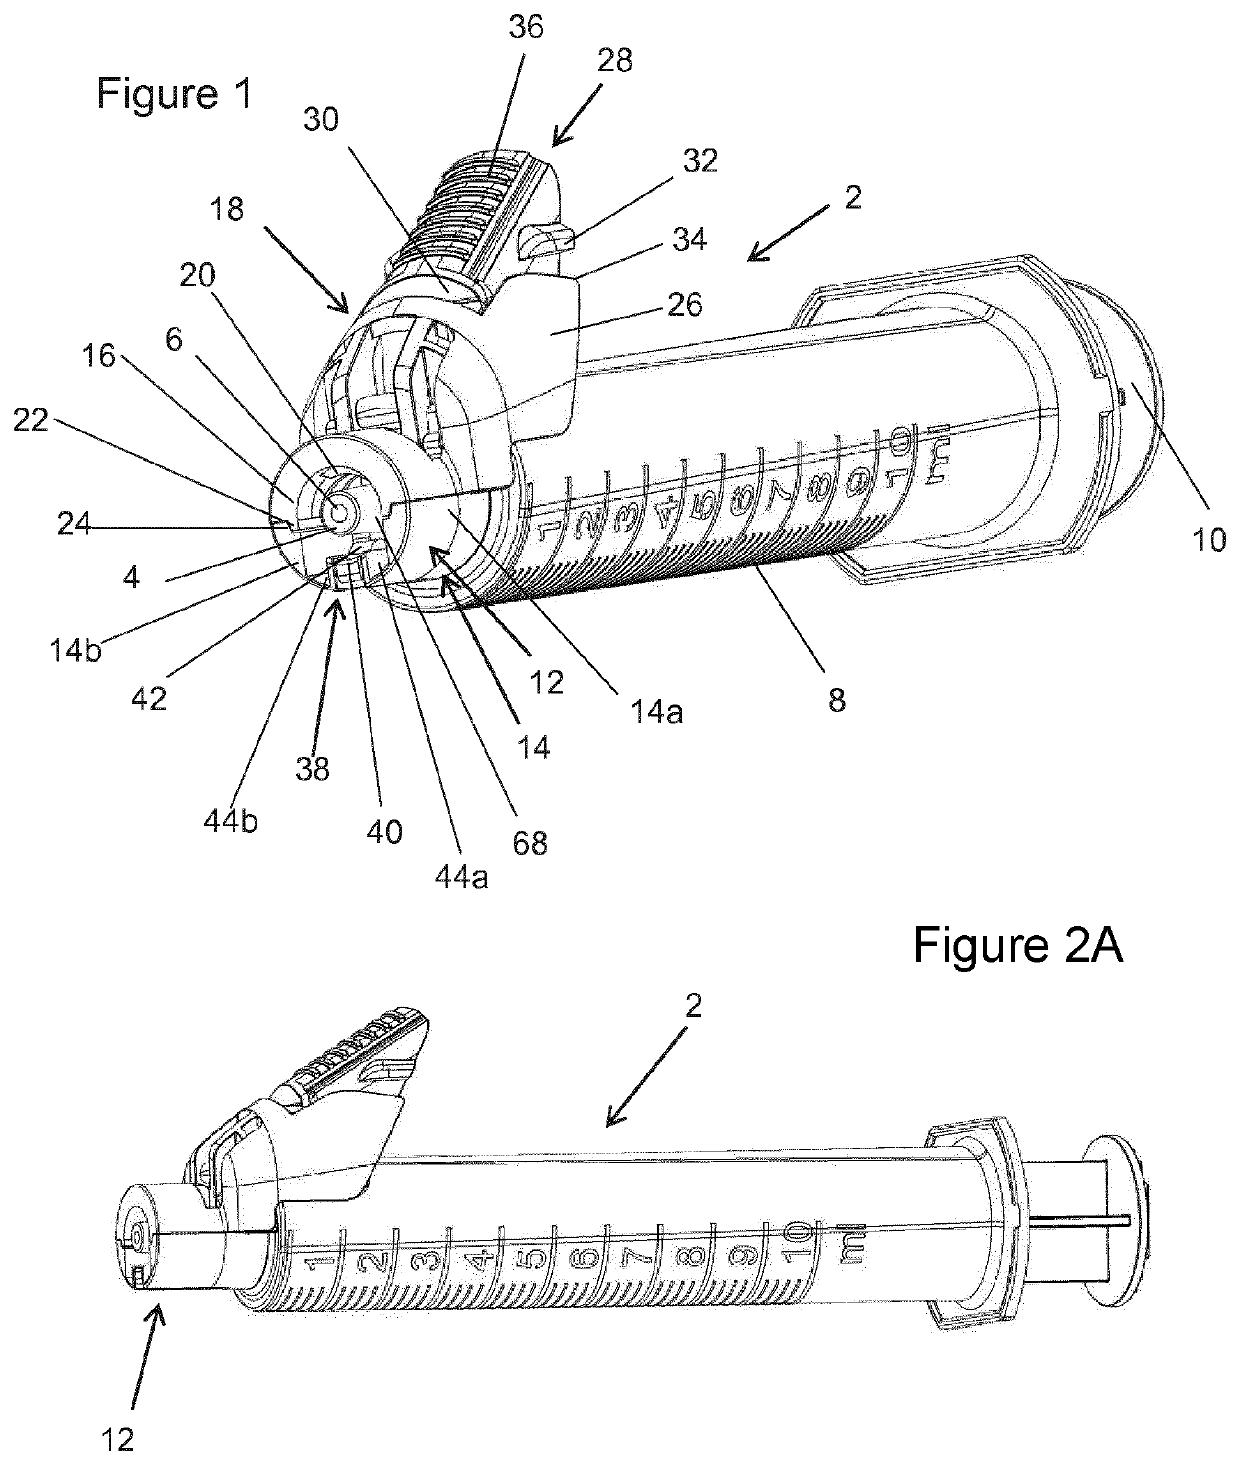 Medical device connectors